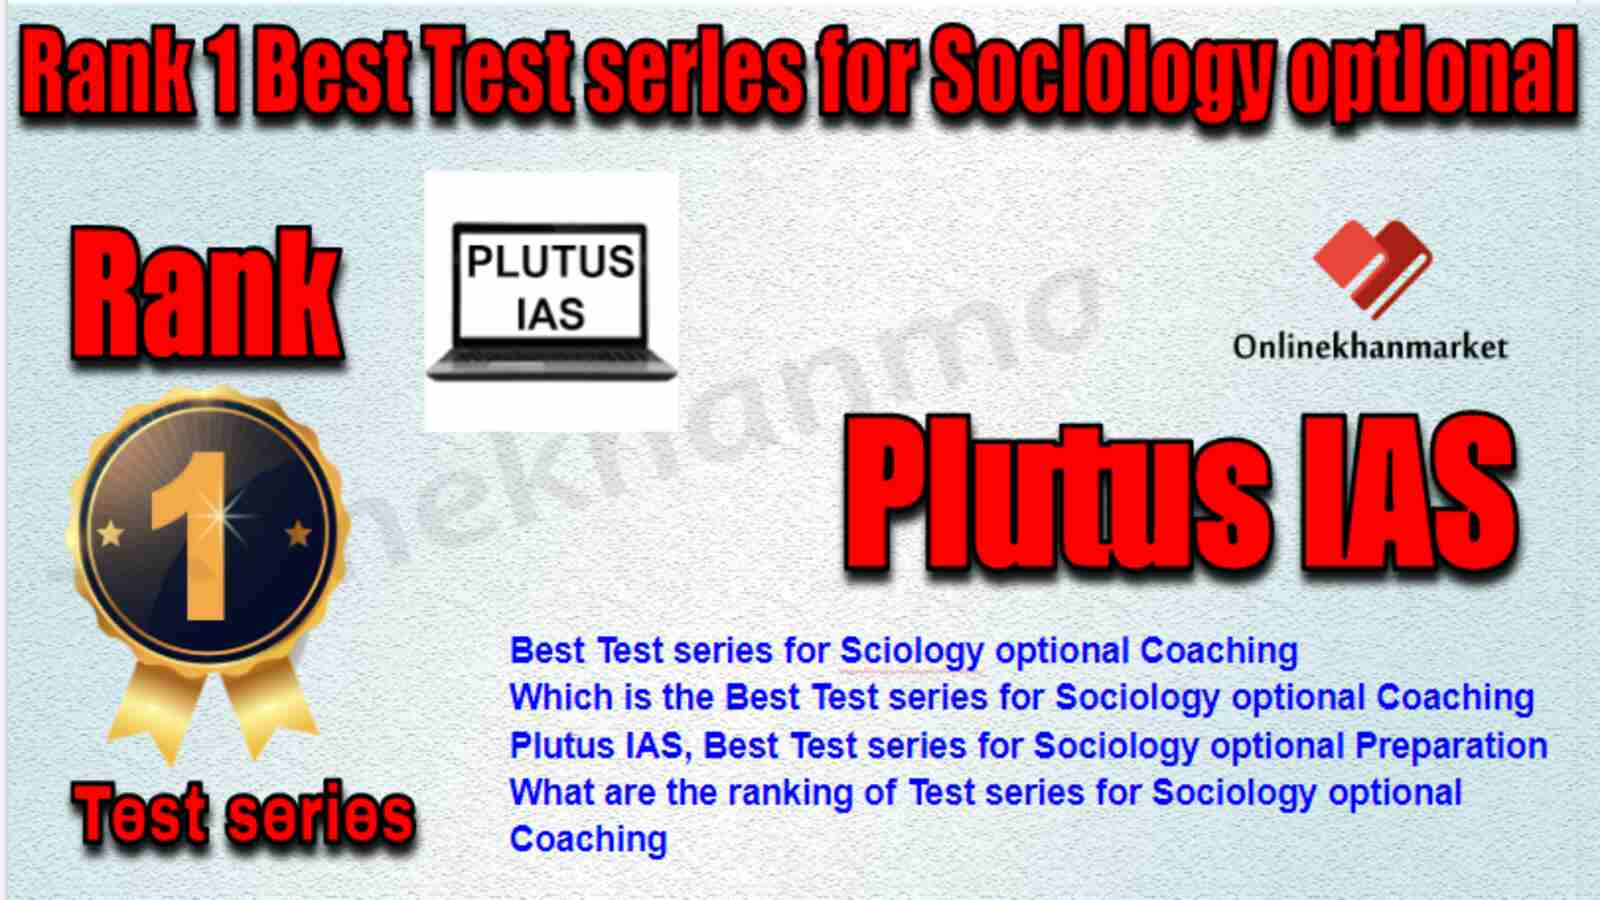 Rank 1 Best Test series for Sociology optional